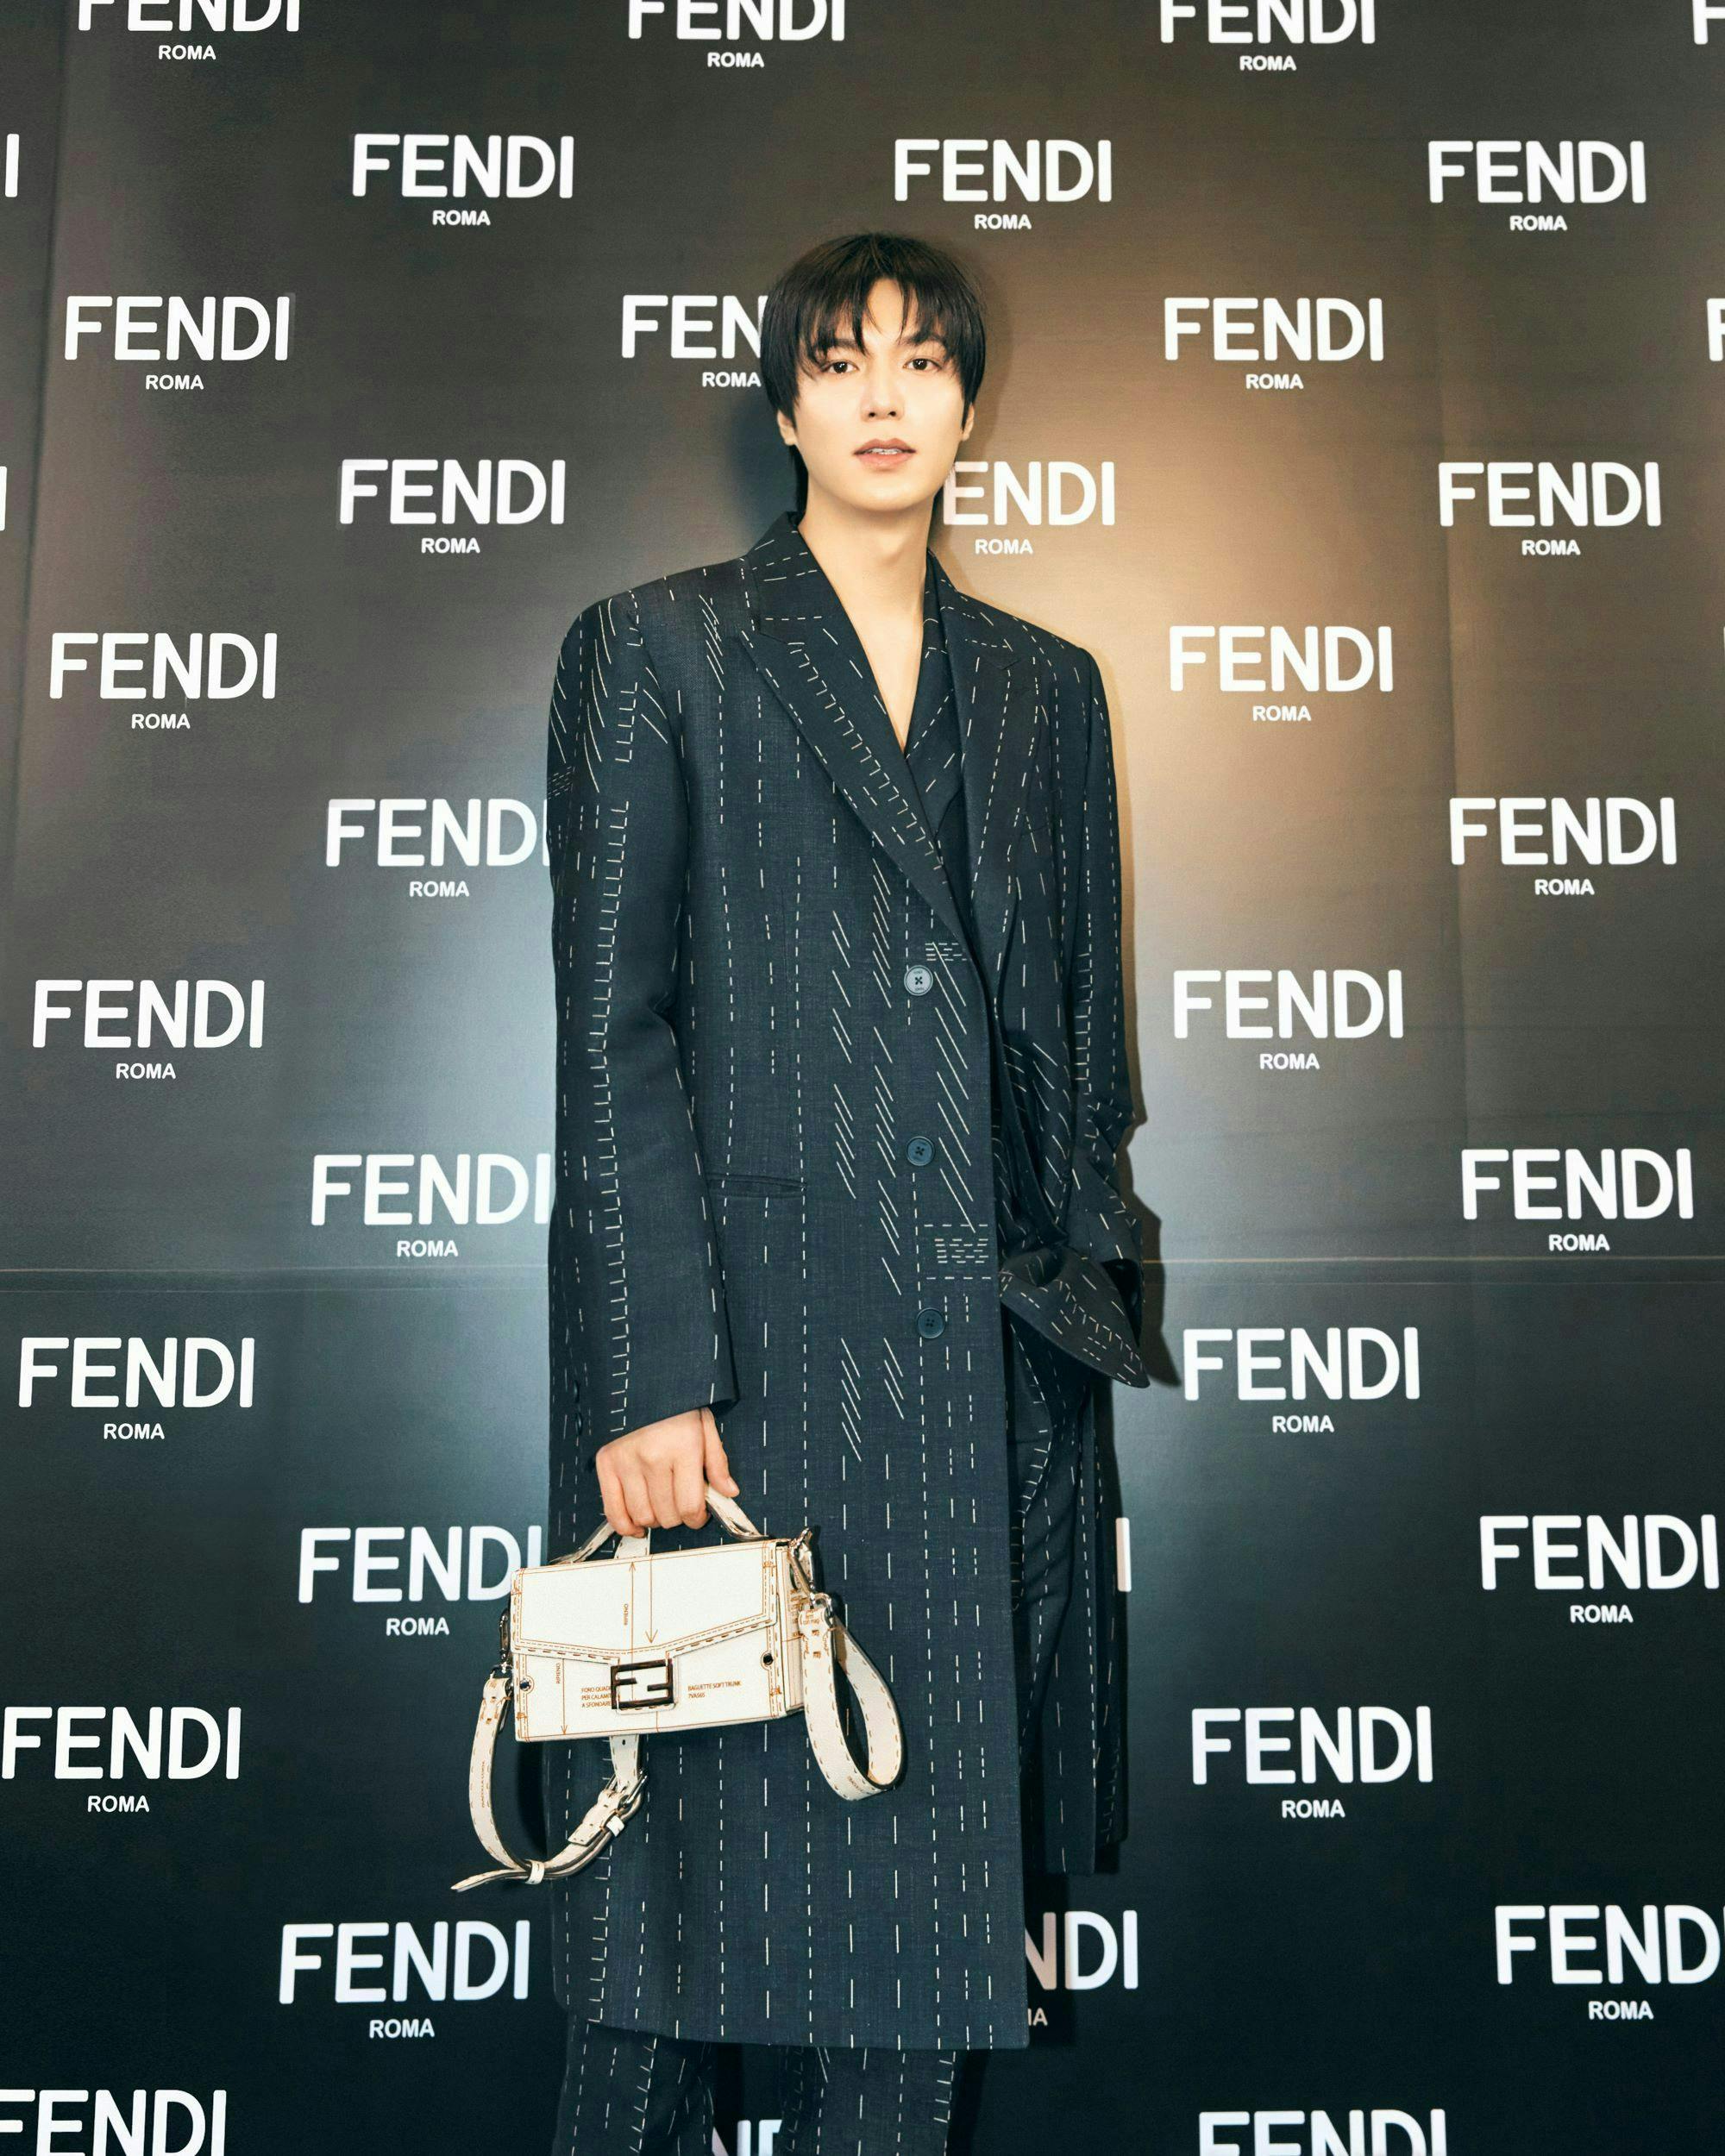 accessories bag handbag coat formal wear suit standing purse fashion black hair